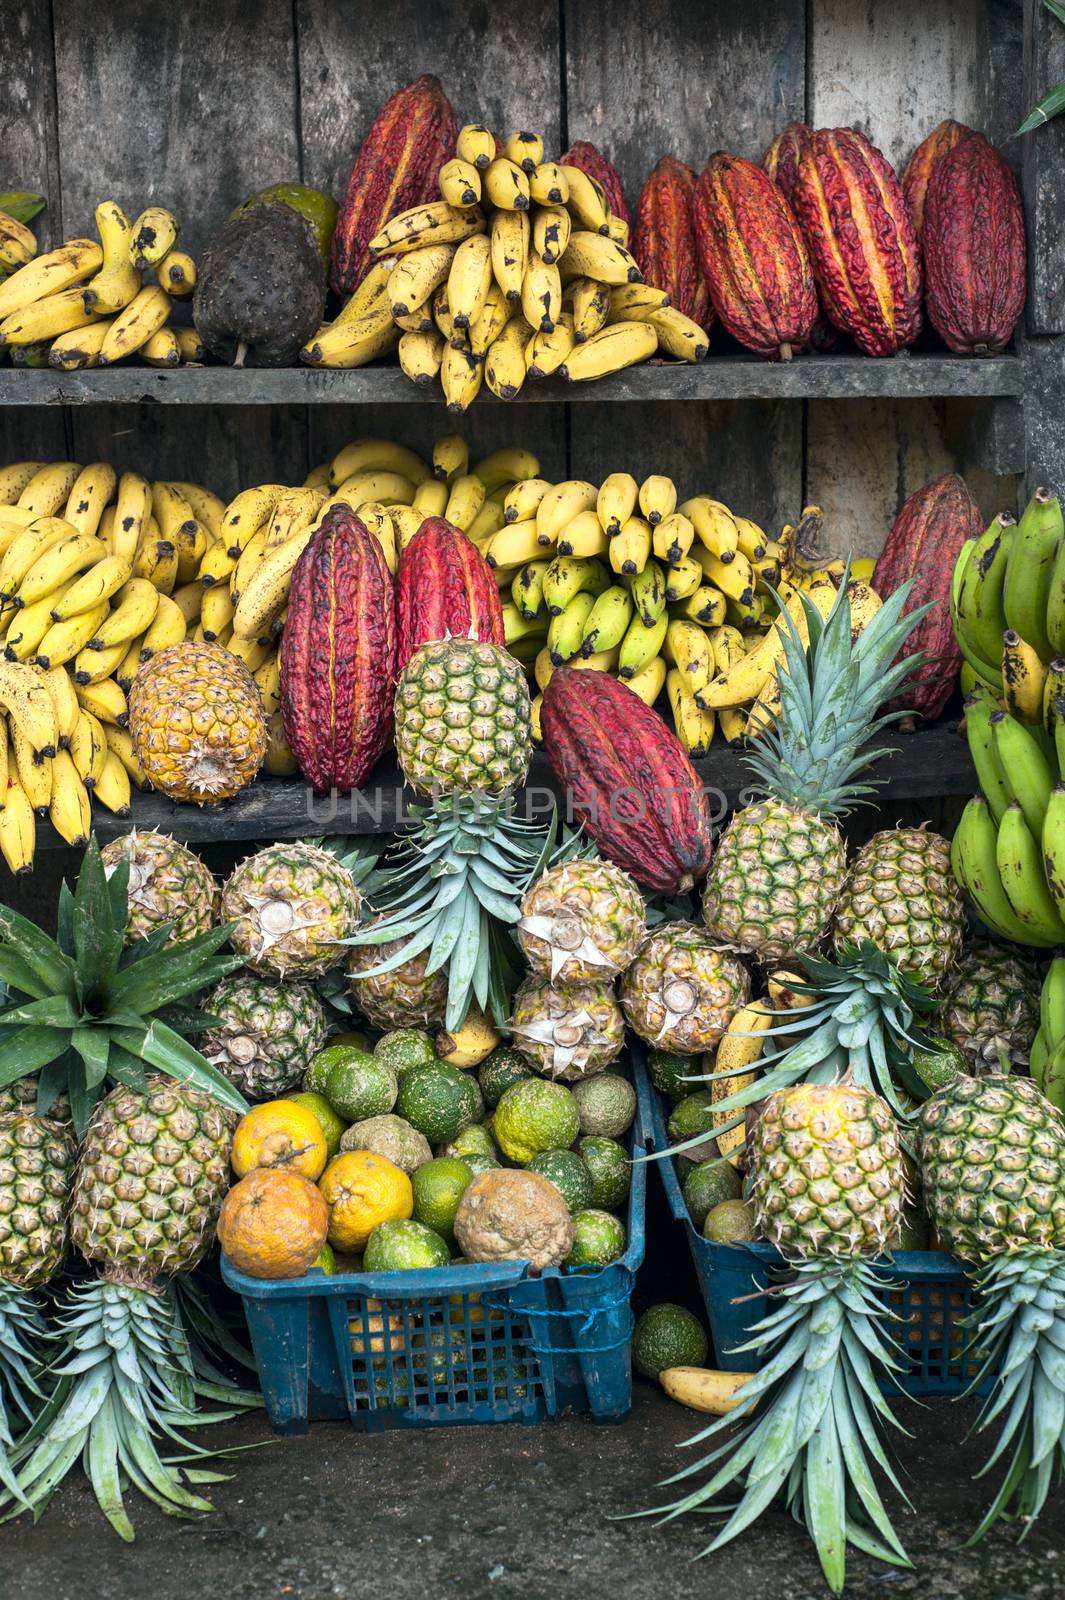 Latin America Fruit street market, Ecuador by xura